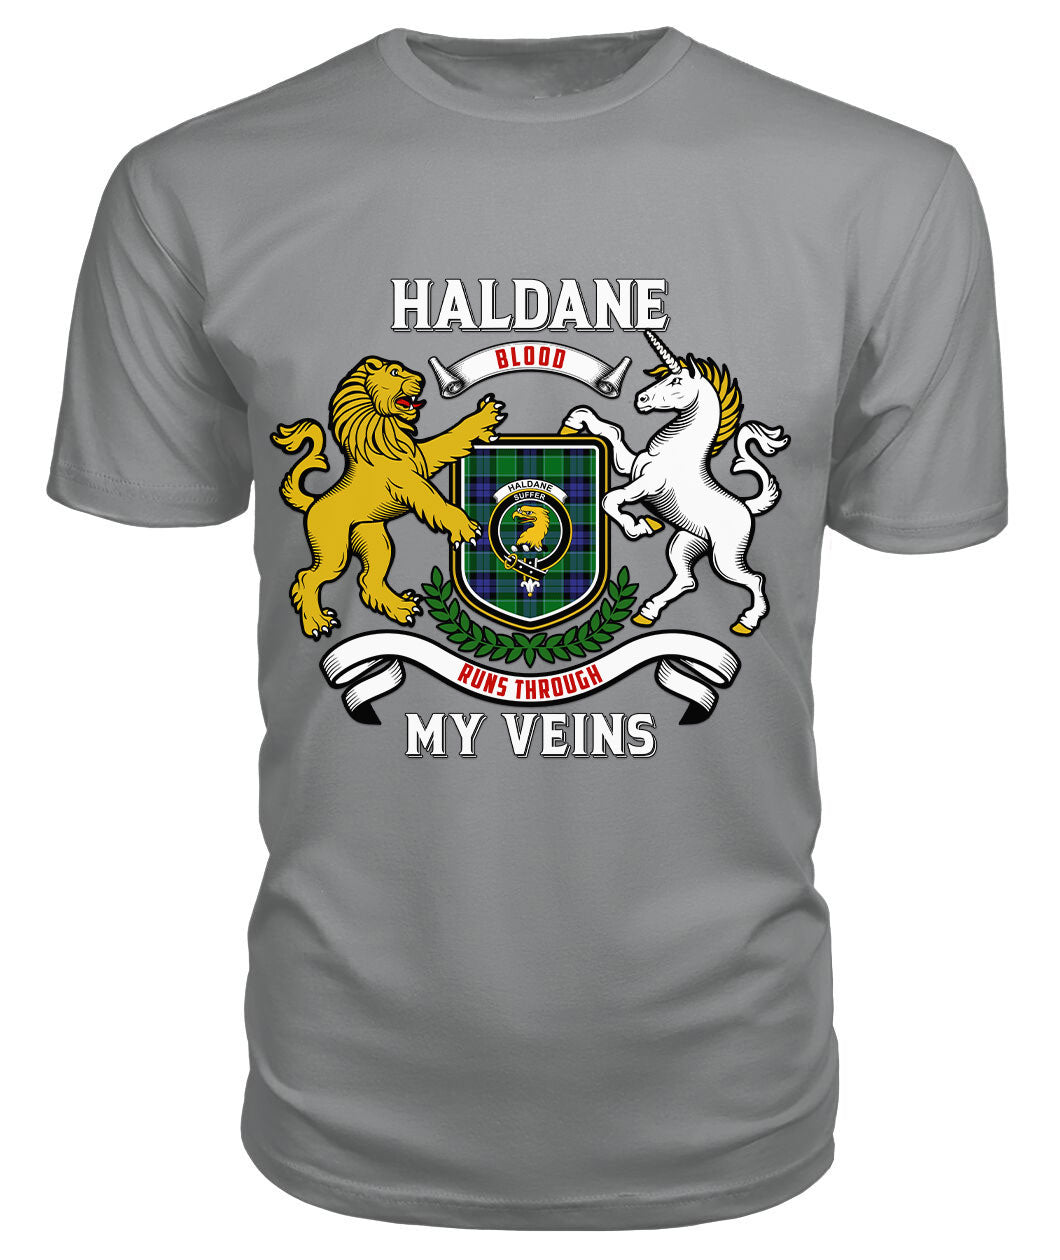 Haldane Tartan Crest 2D T-shirt - Blood Runs Through My Veins Style